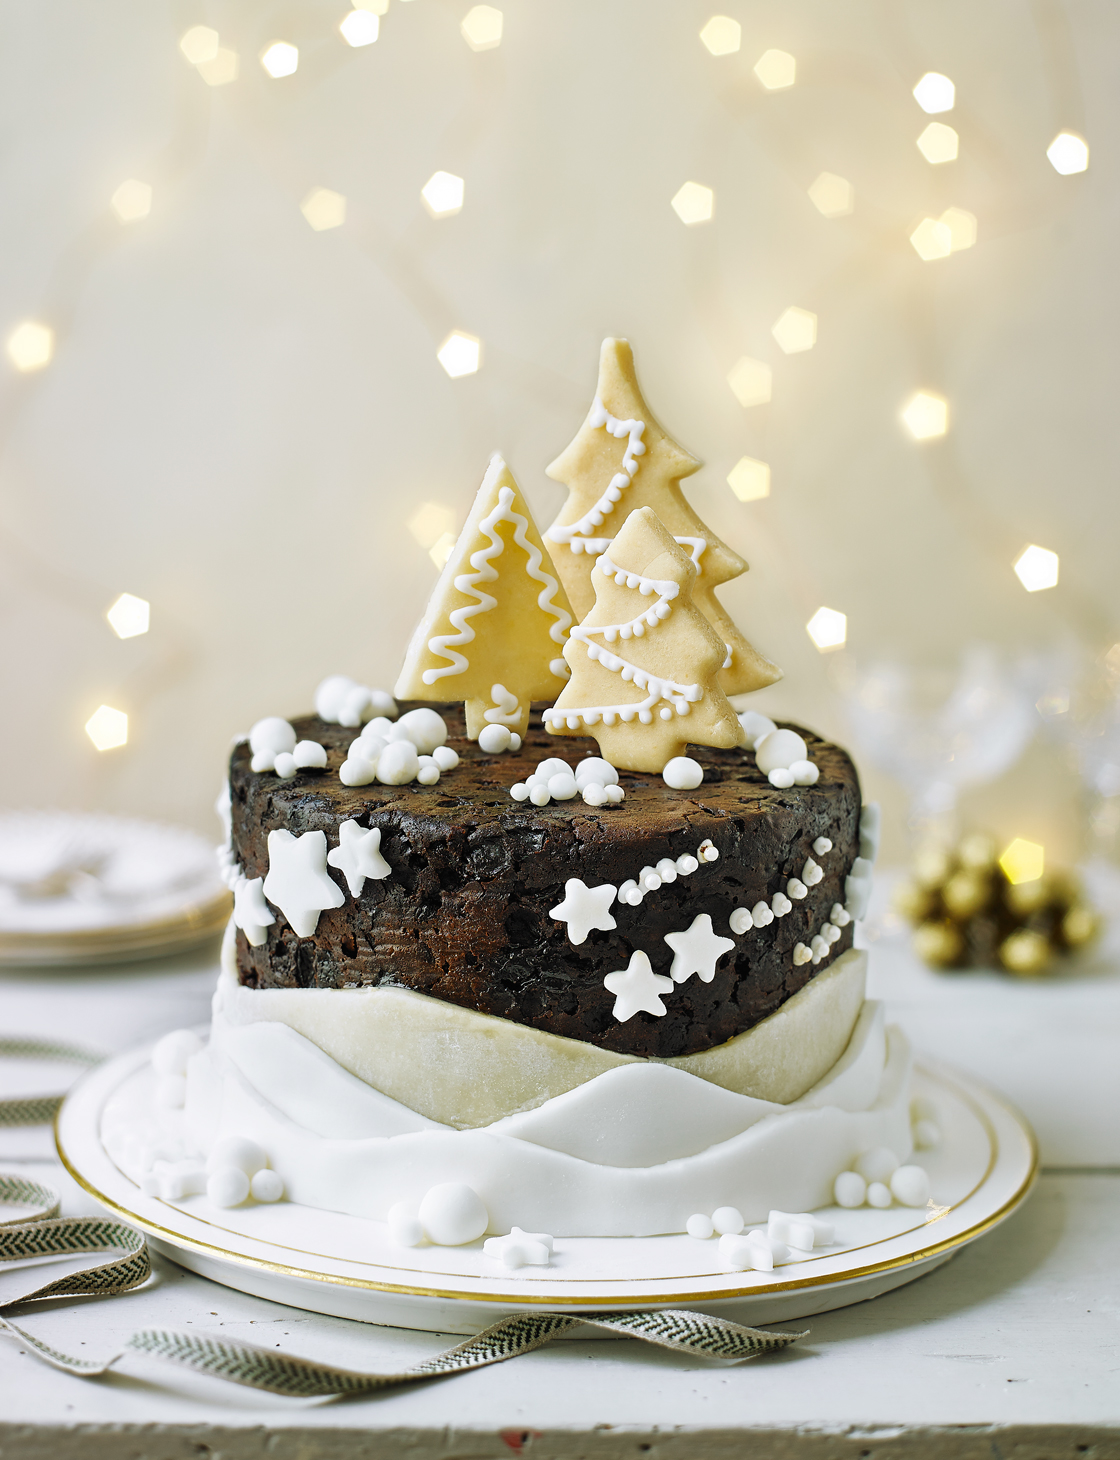 40 Christmas Cake Decoration Ideas To Dazzle You - Christmas Celebrations